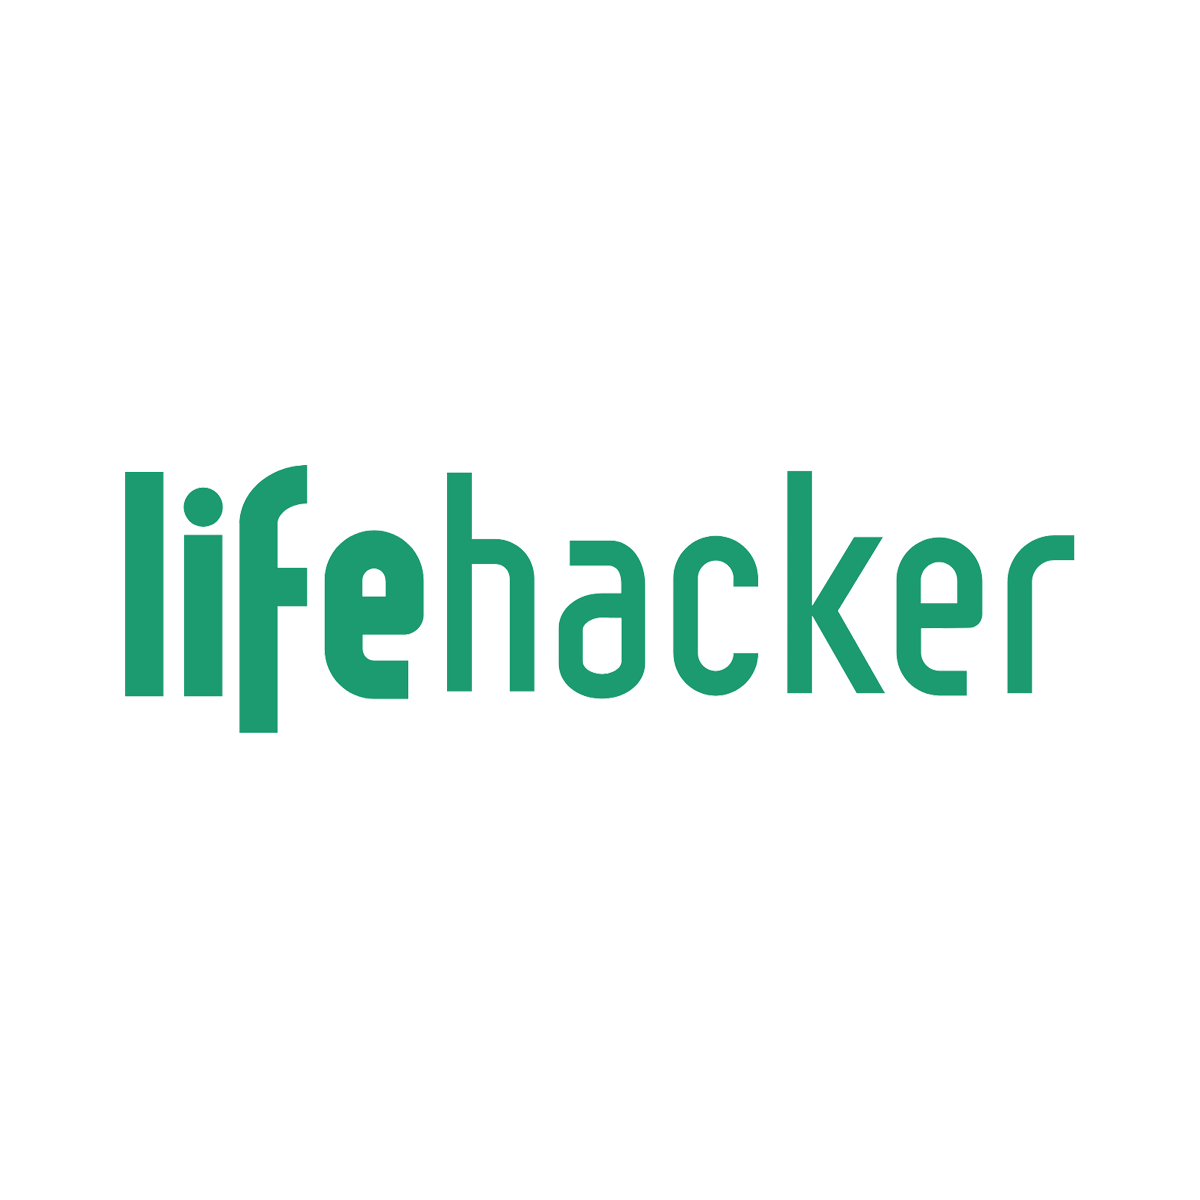 『Lifehacker』に紹介されました